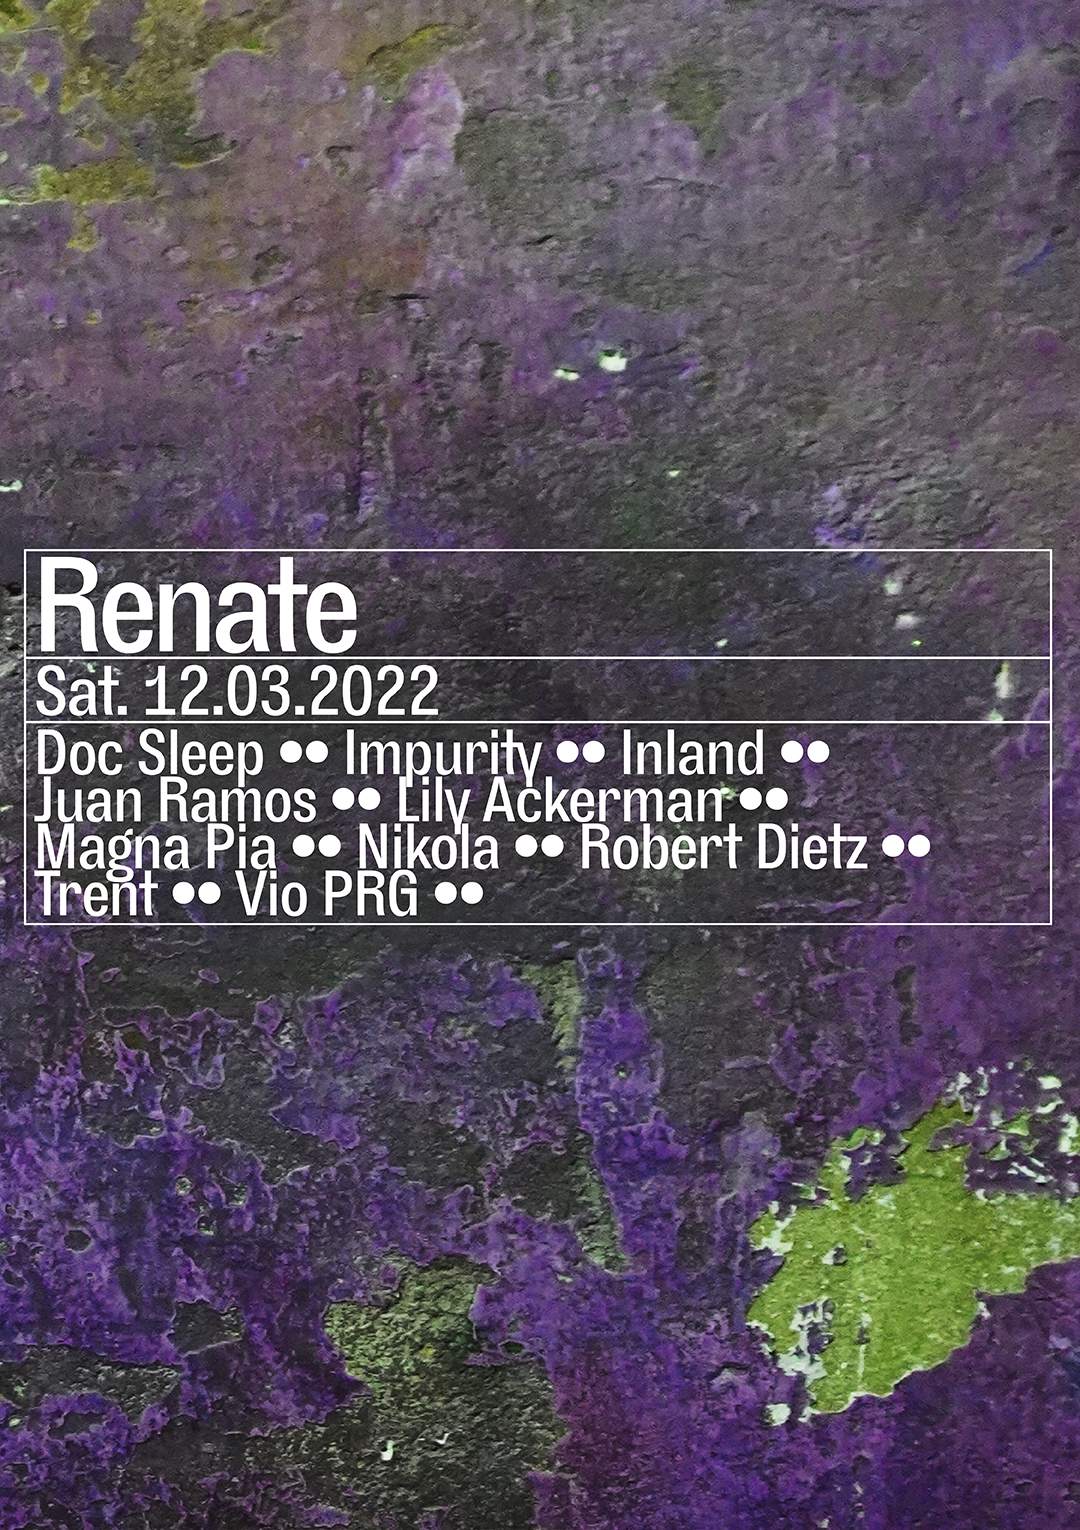 Doc Sleep, Inland, Juan Ramos, Robert Dietz - フライヤー表